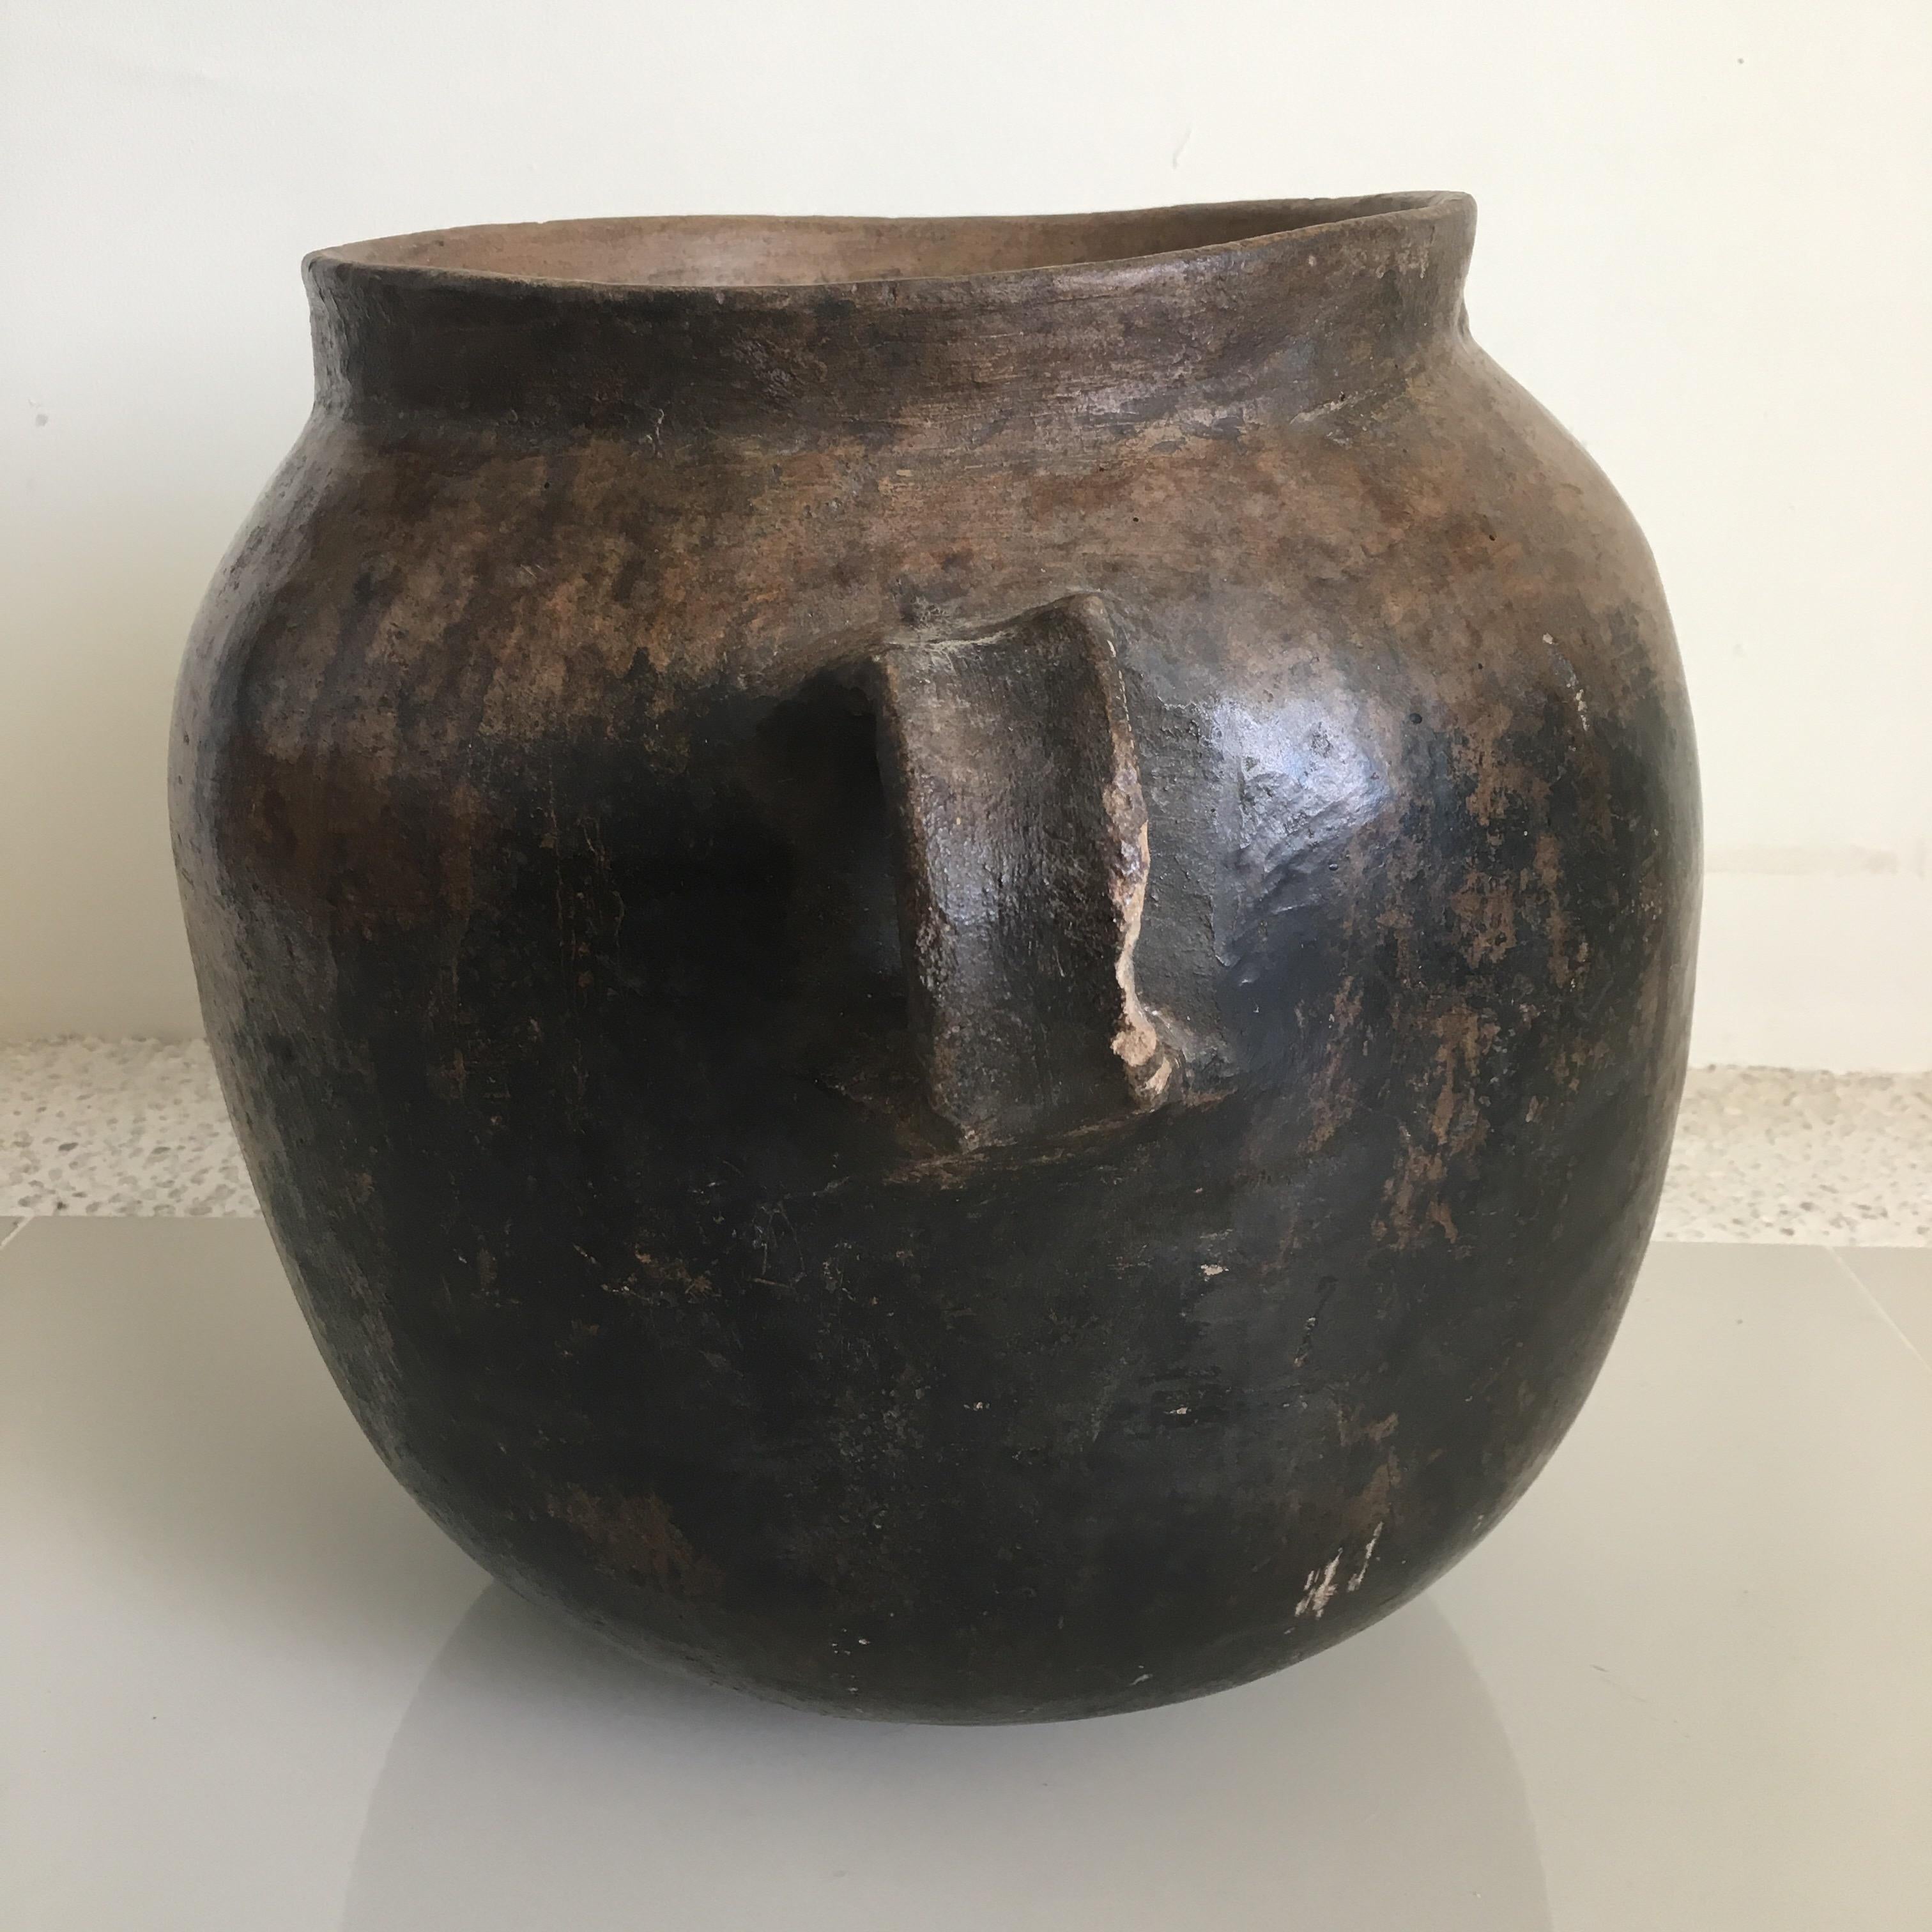 Burnished ceramic water pot from Los Reyes Metzontla region, Puebla.